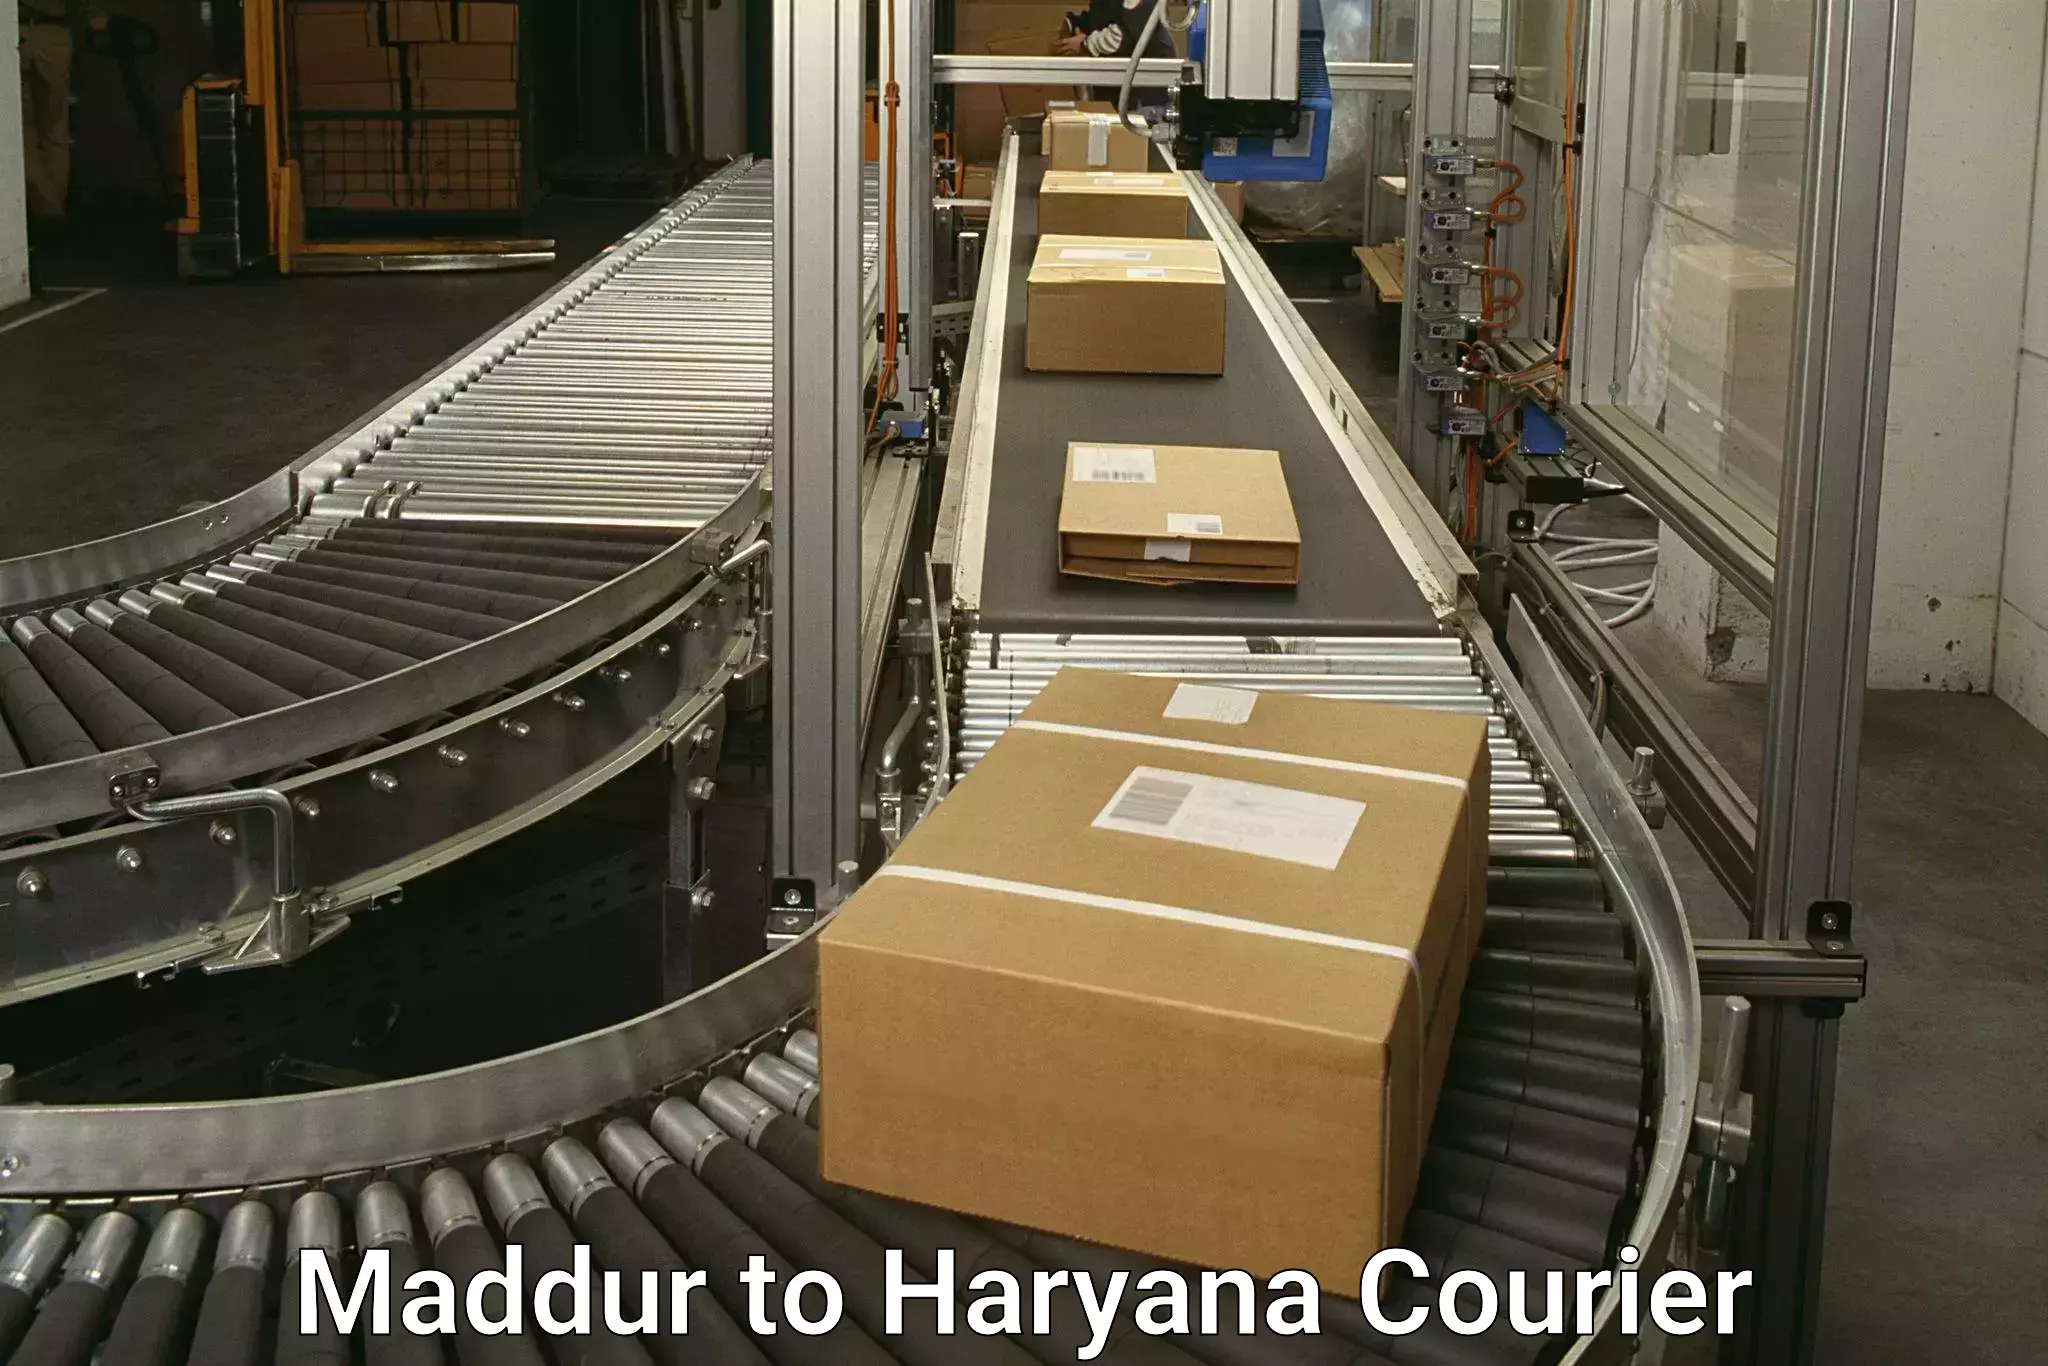 Courier service efficiency Maddur to Gurugram